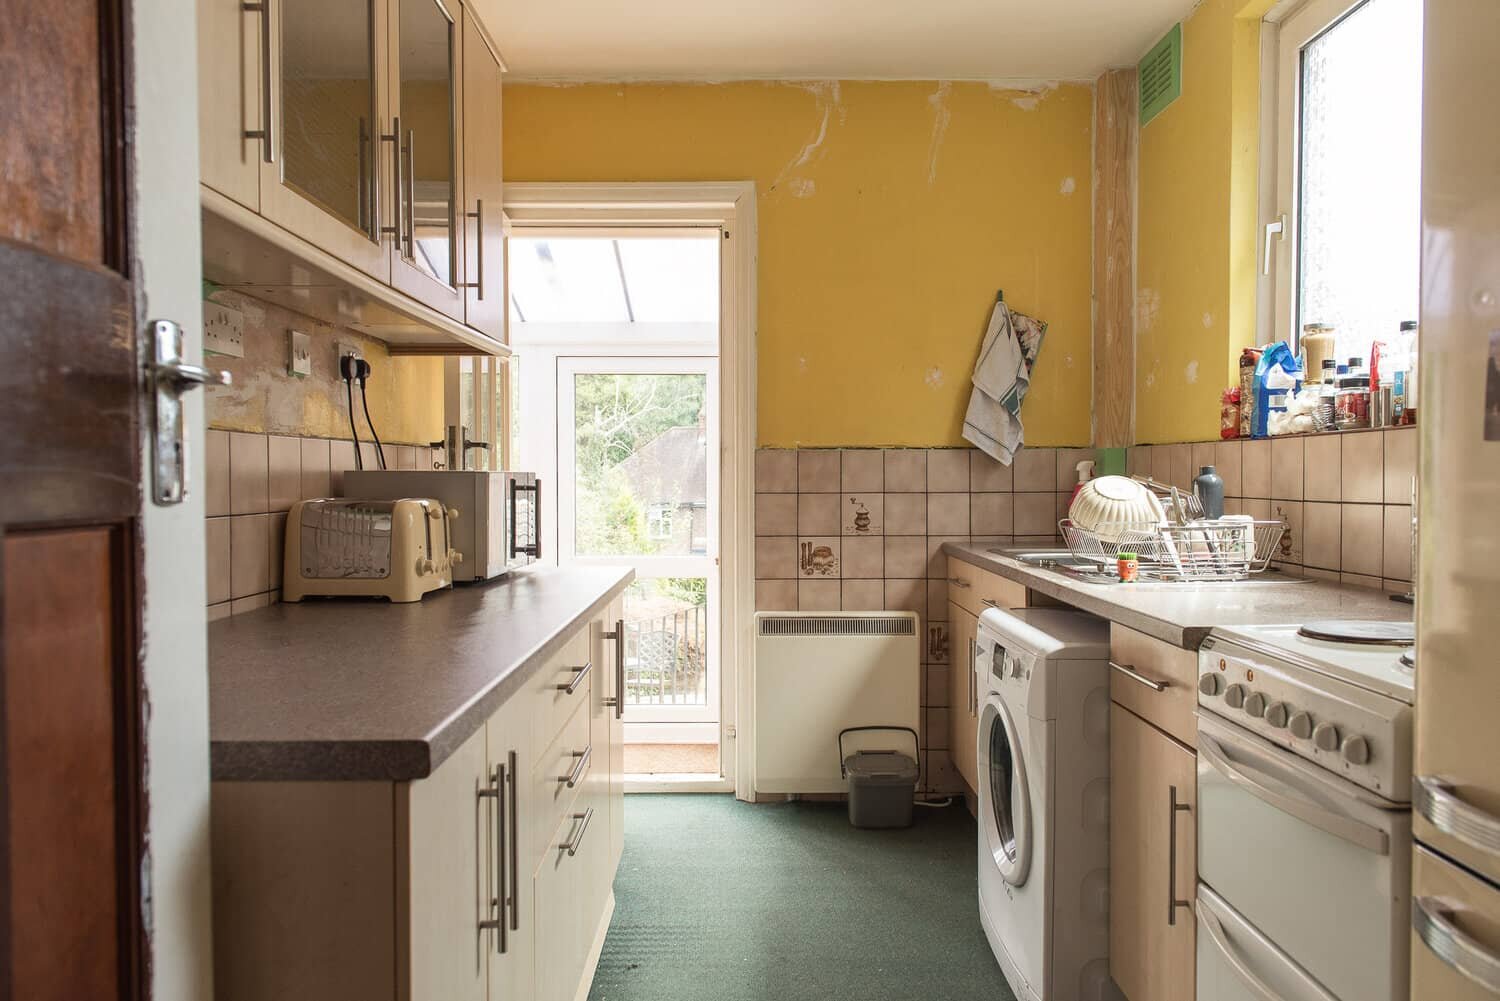 kitchen extension cost uk.jpg